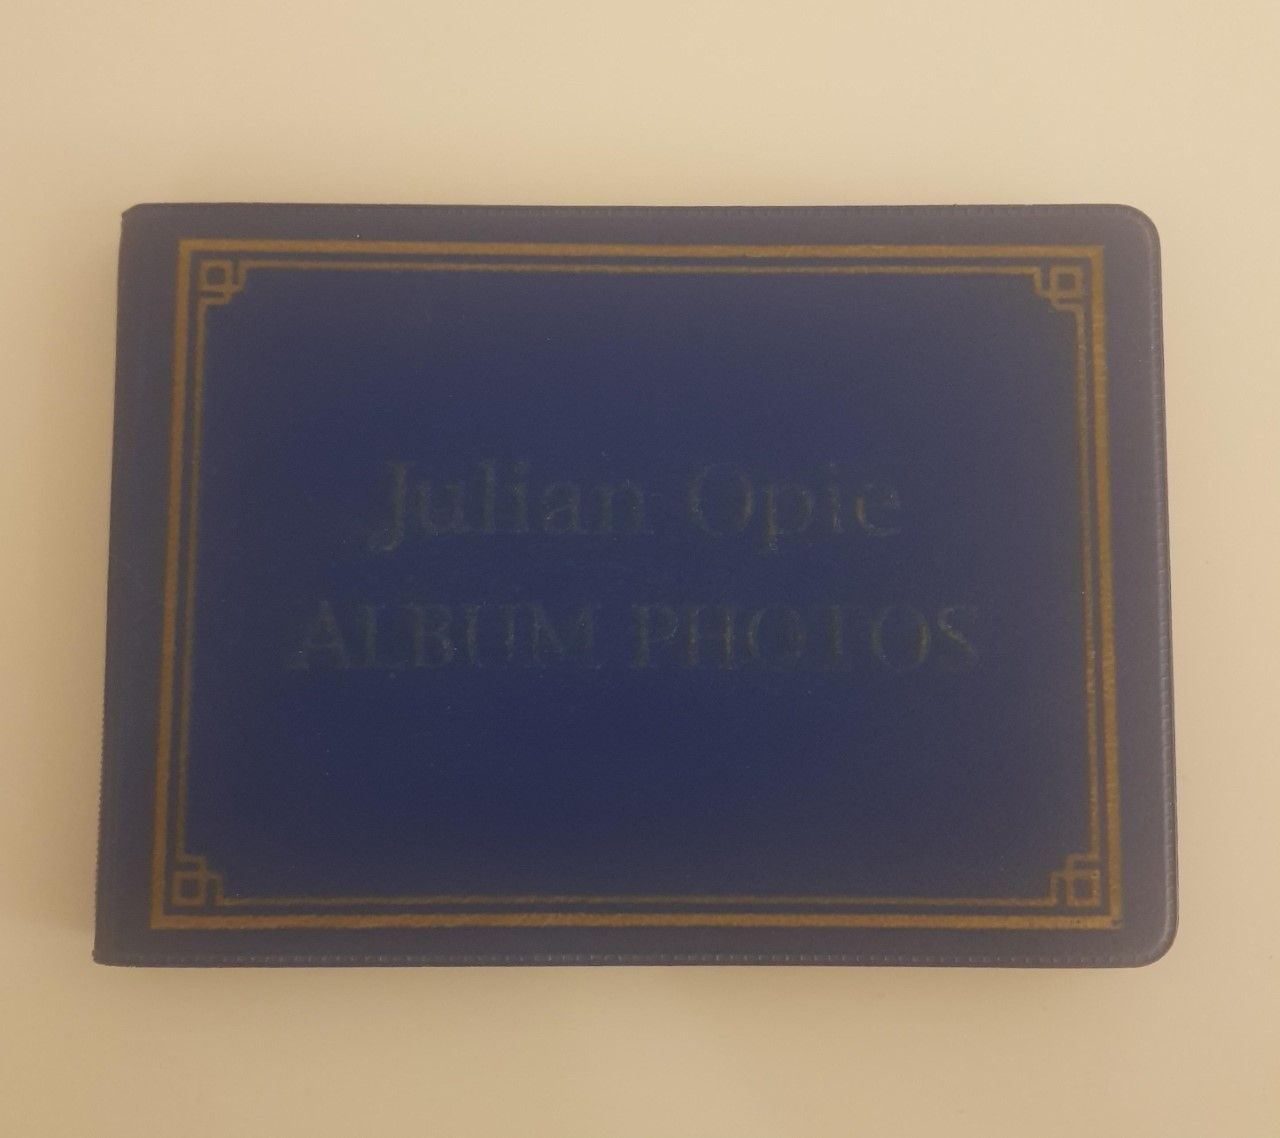 OPIE JULIAN OPIE JULIAN
London (England) 1958

Julian Opie - Album Photos
1995

&hellip;